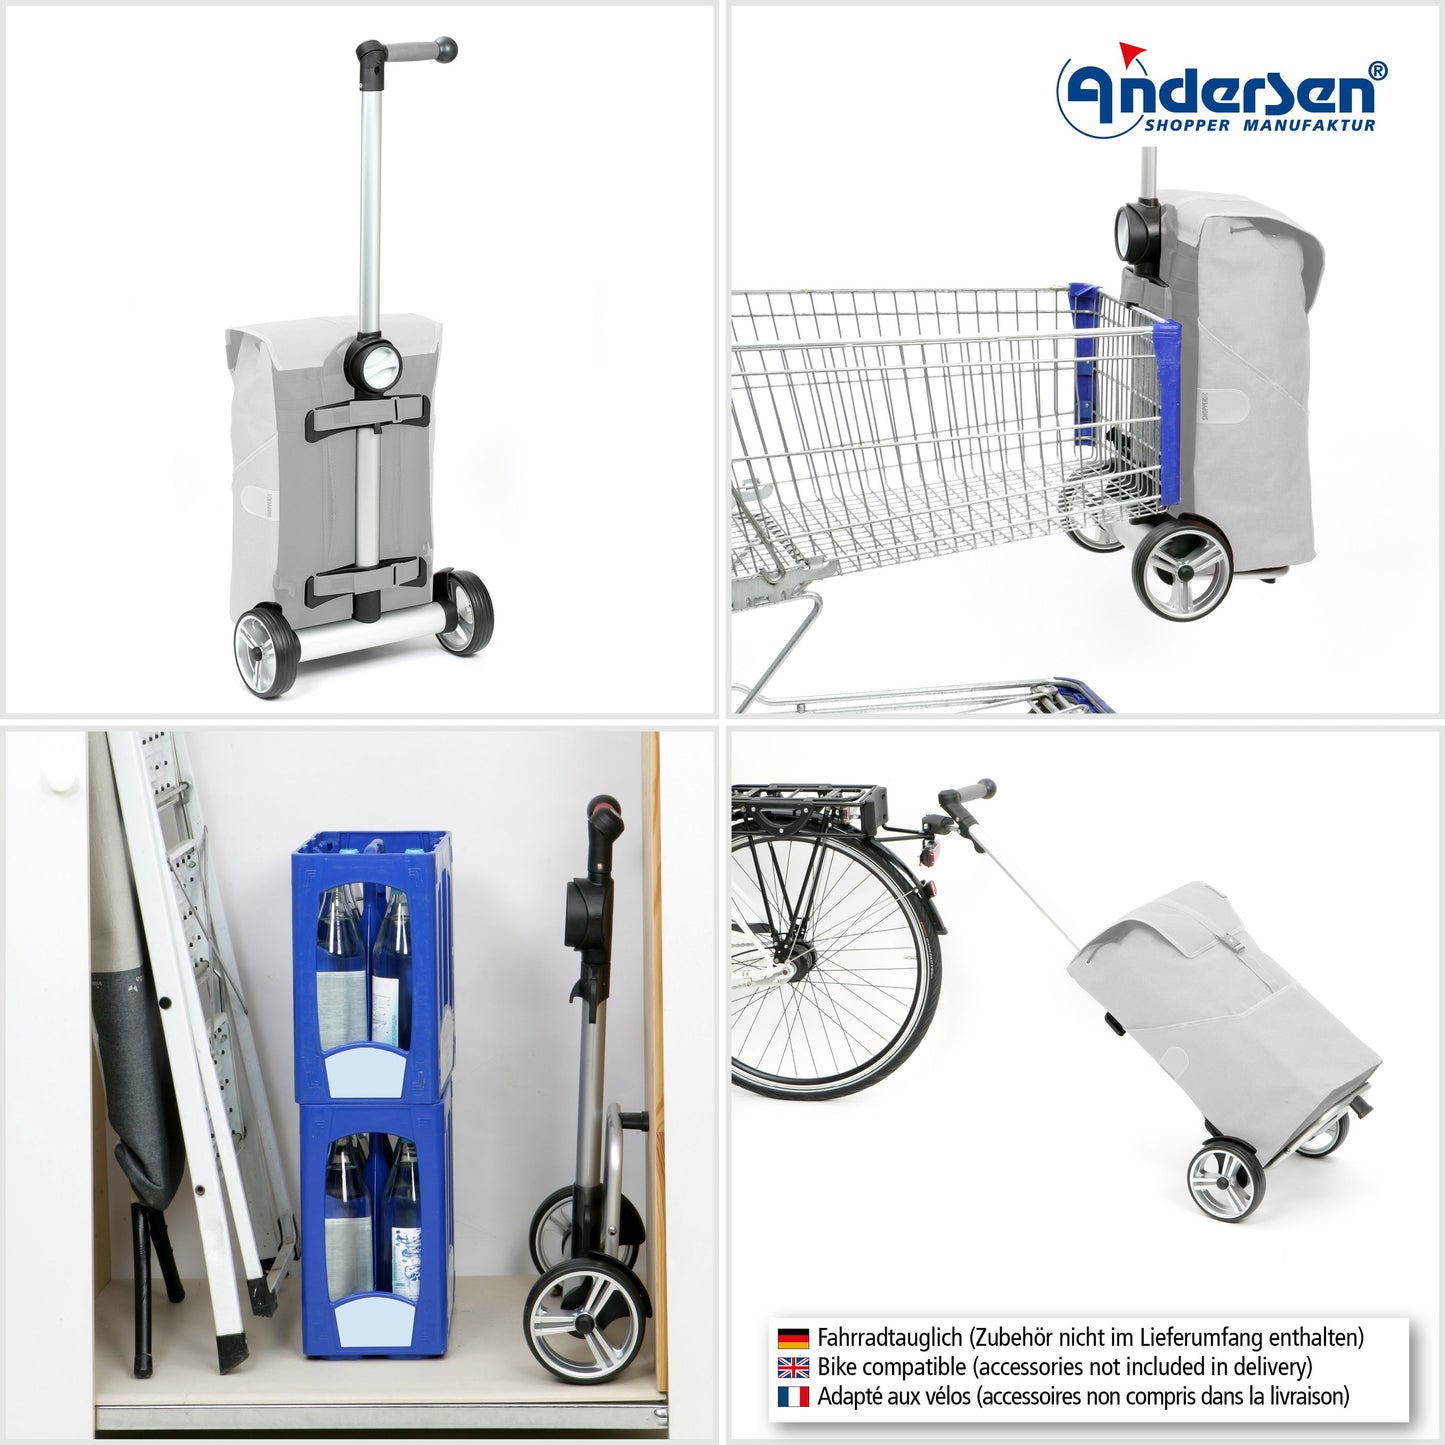 Andersen Shopper Manufaktur-Unus Shopper Inra schwarz-www.shopping-trolley.ch-bild5